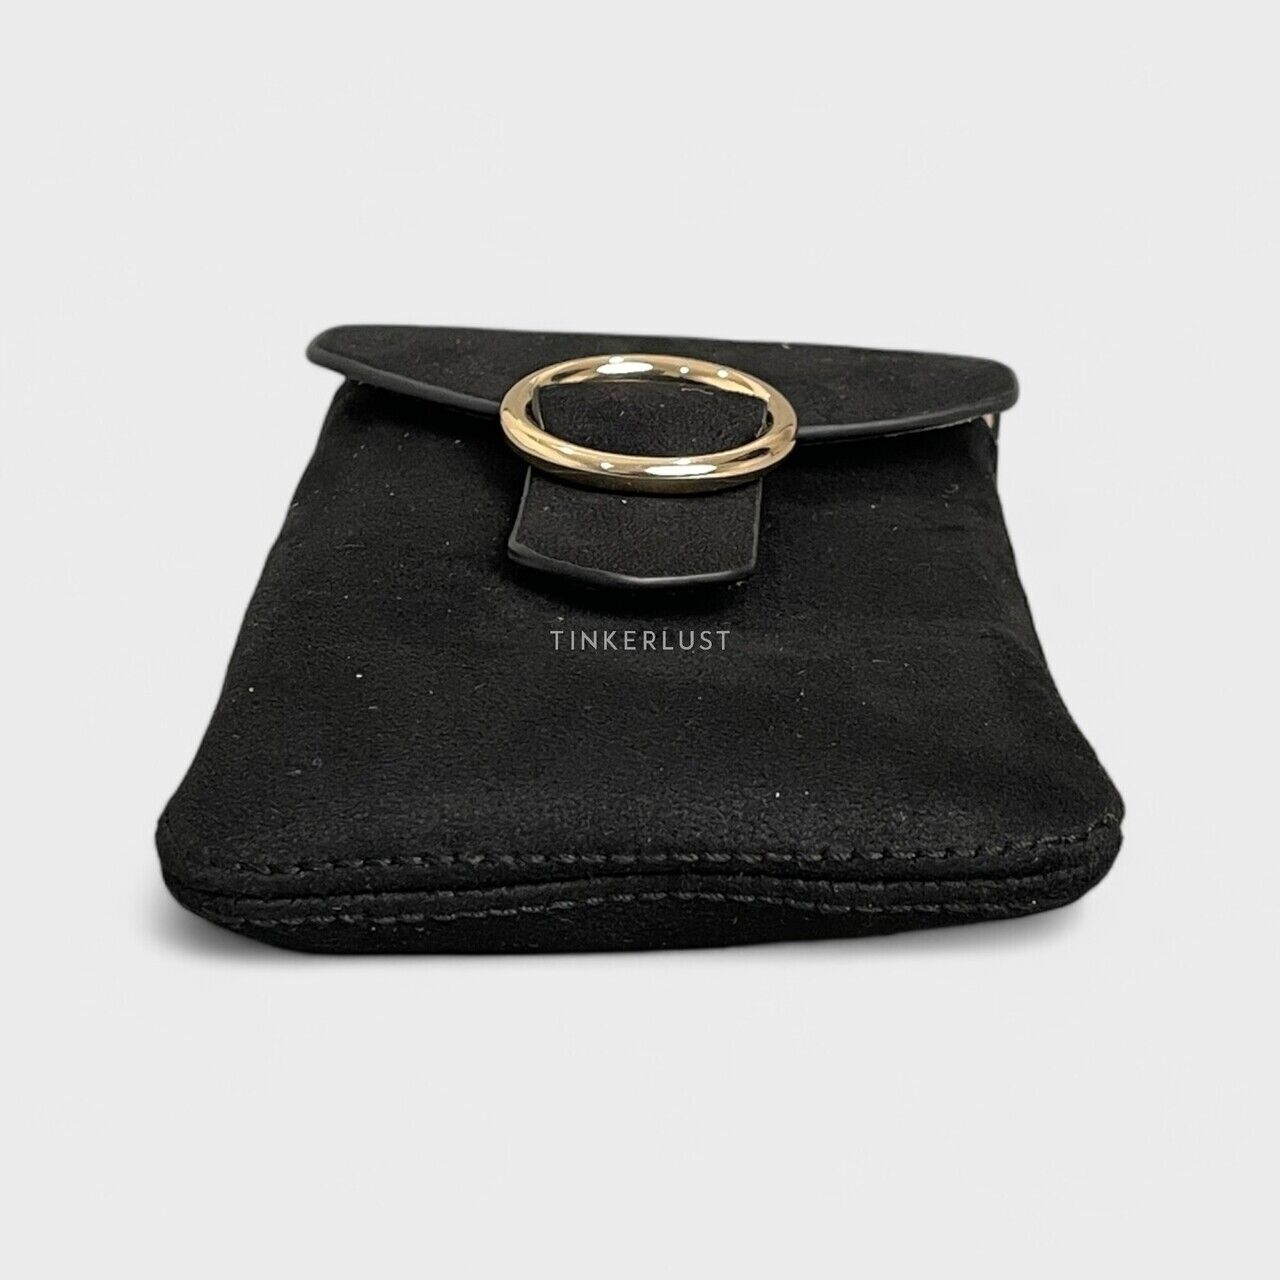 H&M Black Sling Bag